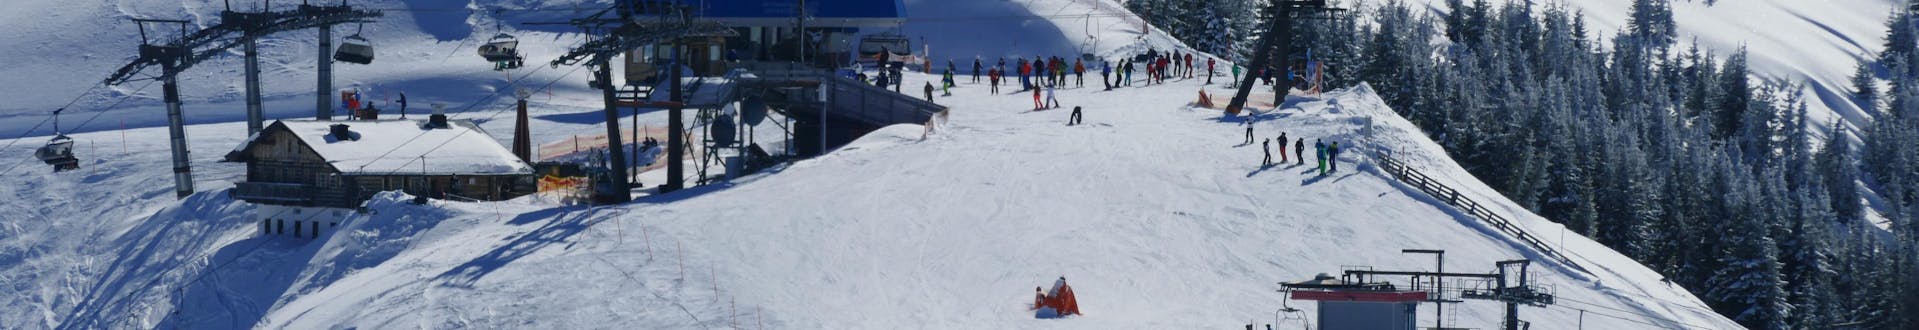 Adultes et enfants skiant dans la station de ski de Grossarl.